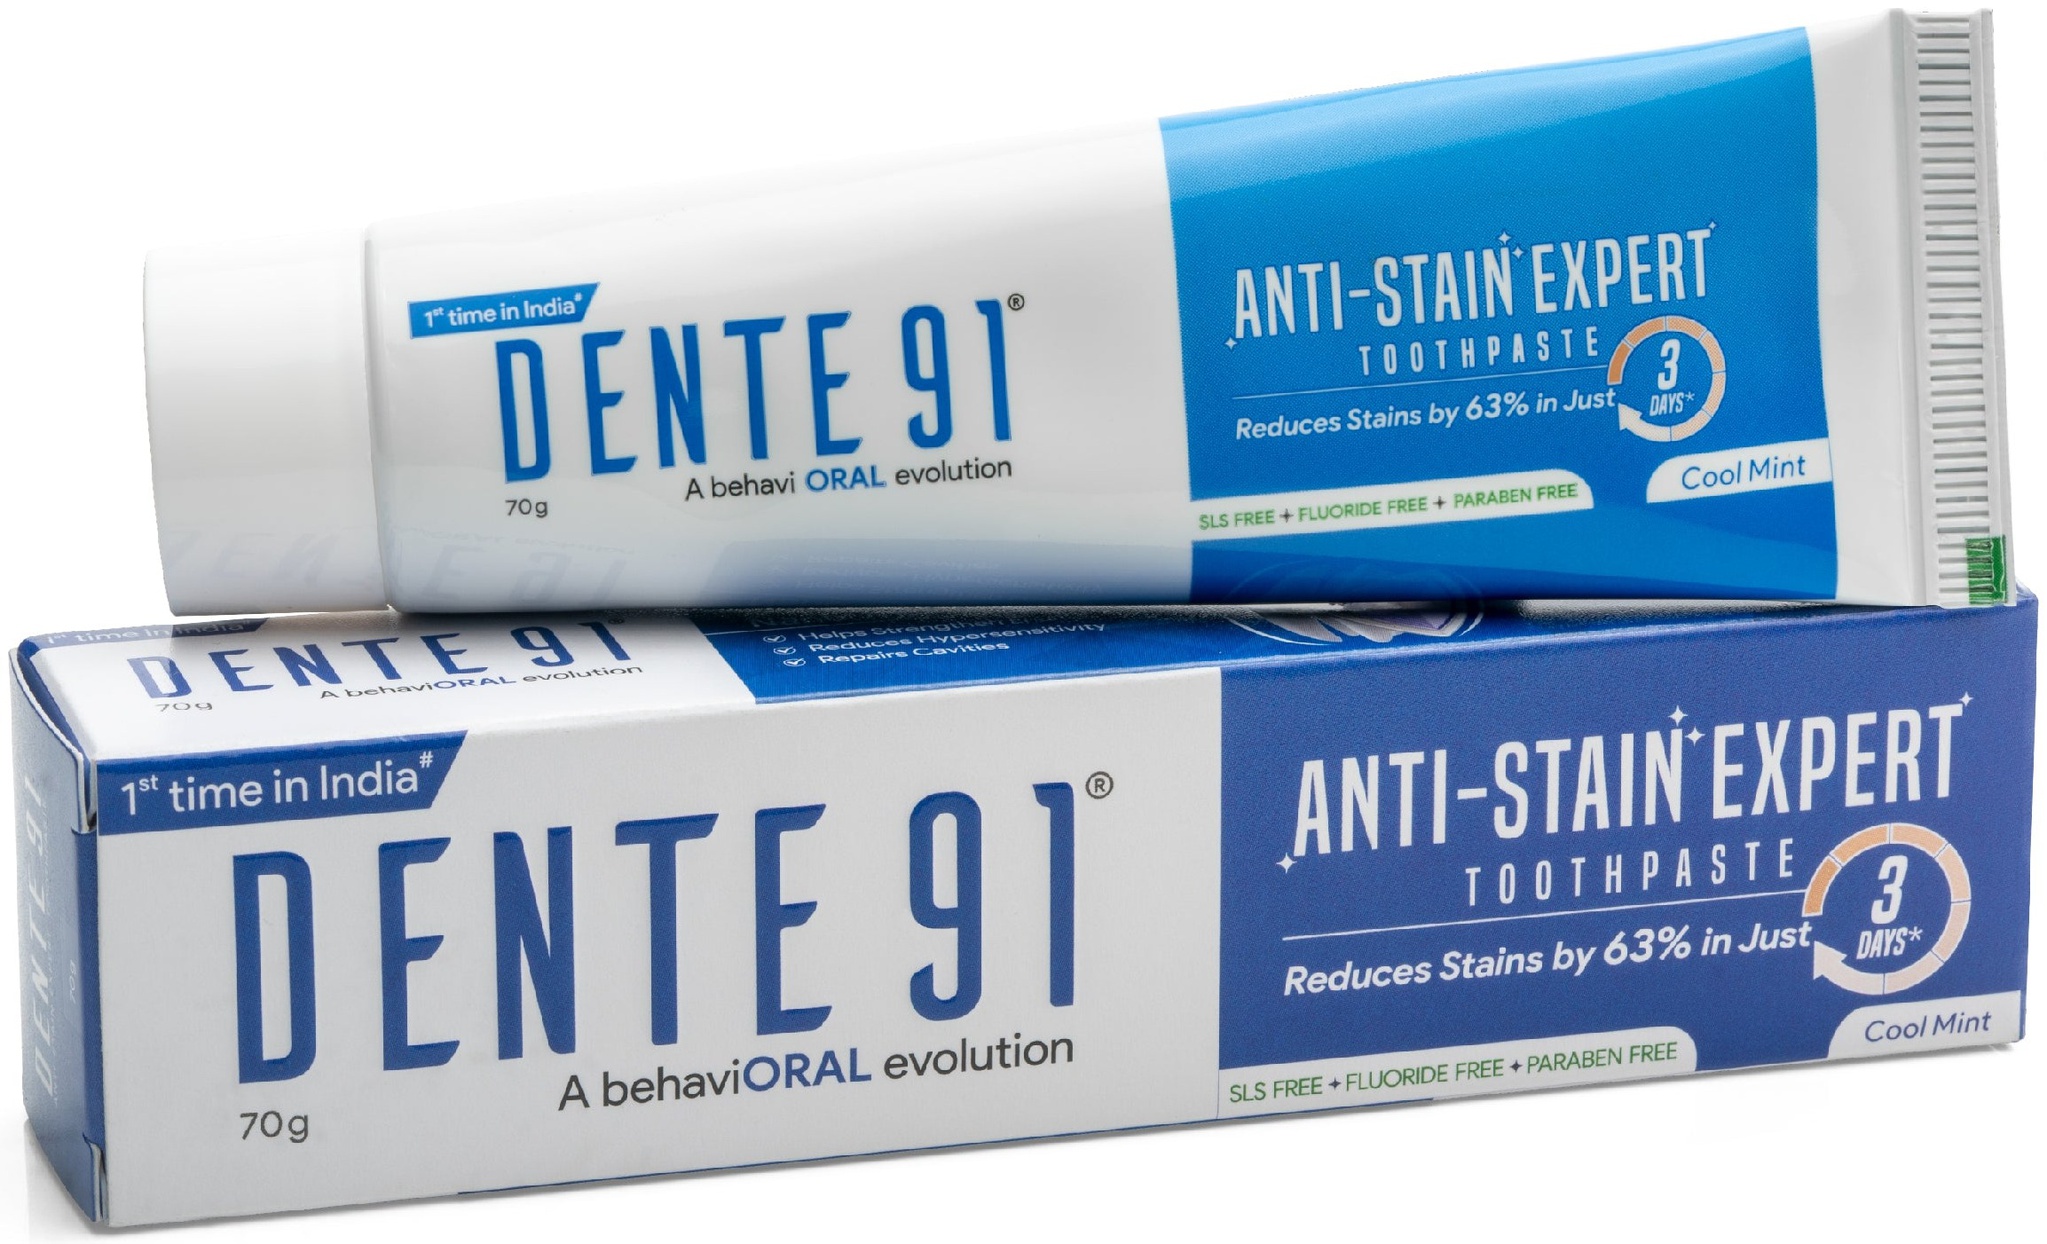 Dente91 Anti-stain Expert Toothpaste